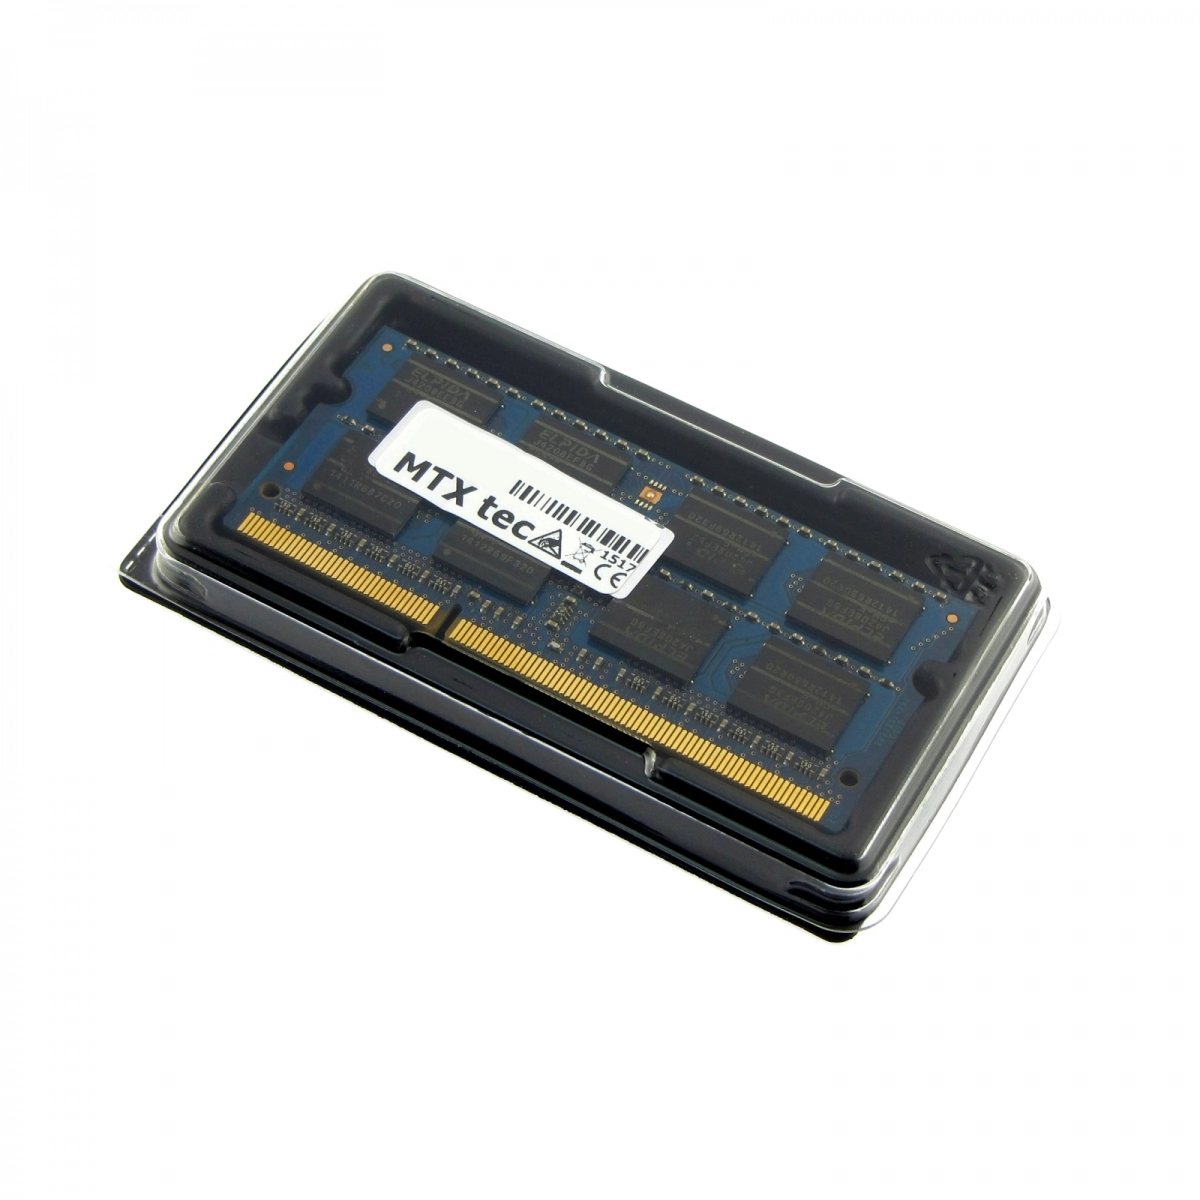 MTXtec Arbeitsspeicher MTXtec, 8 GB RAM